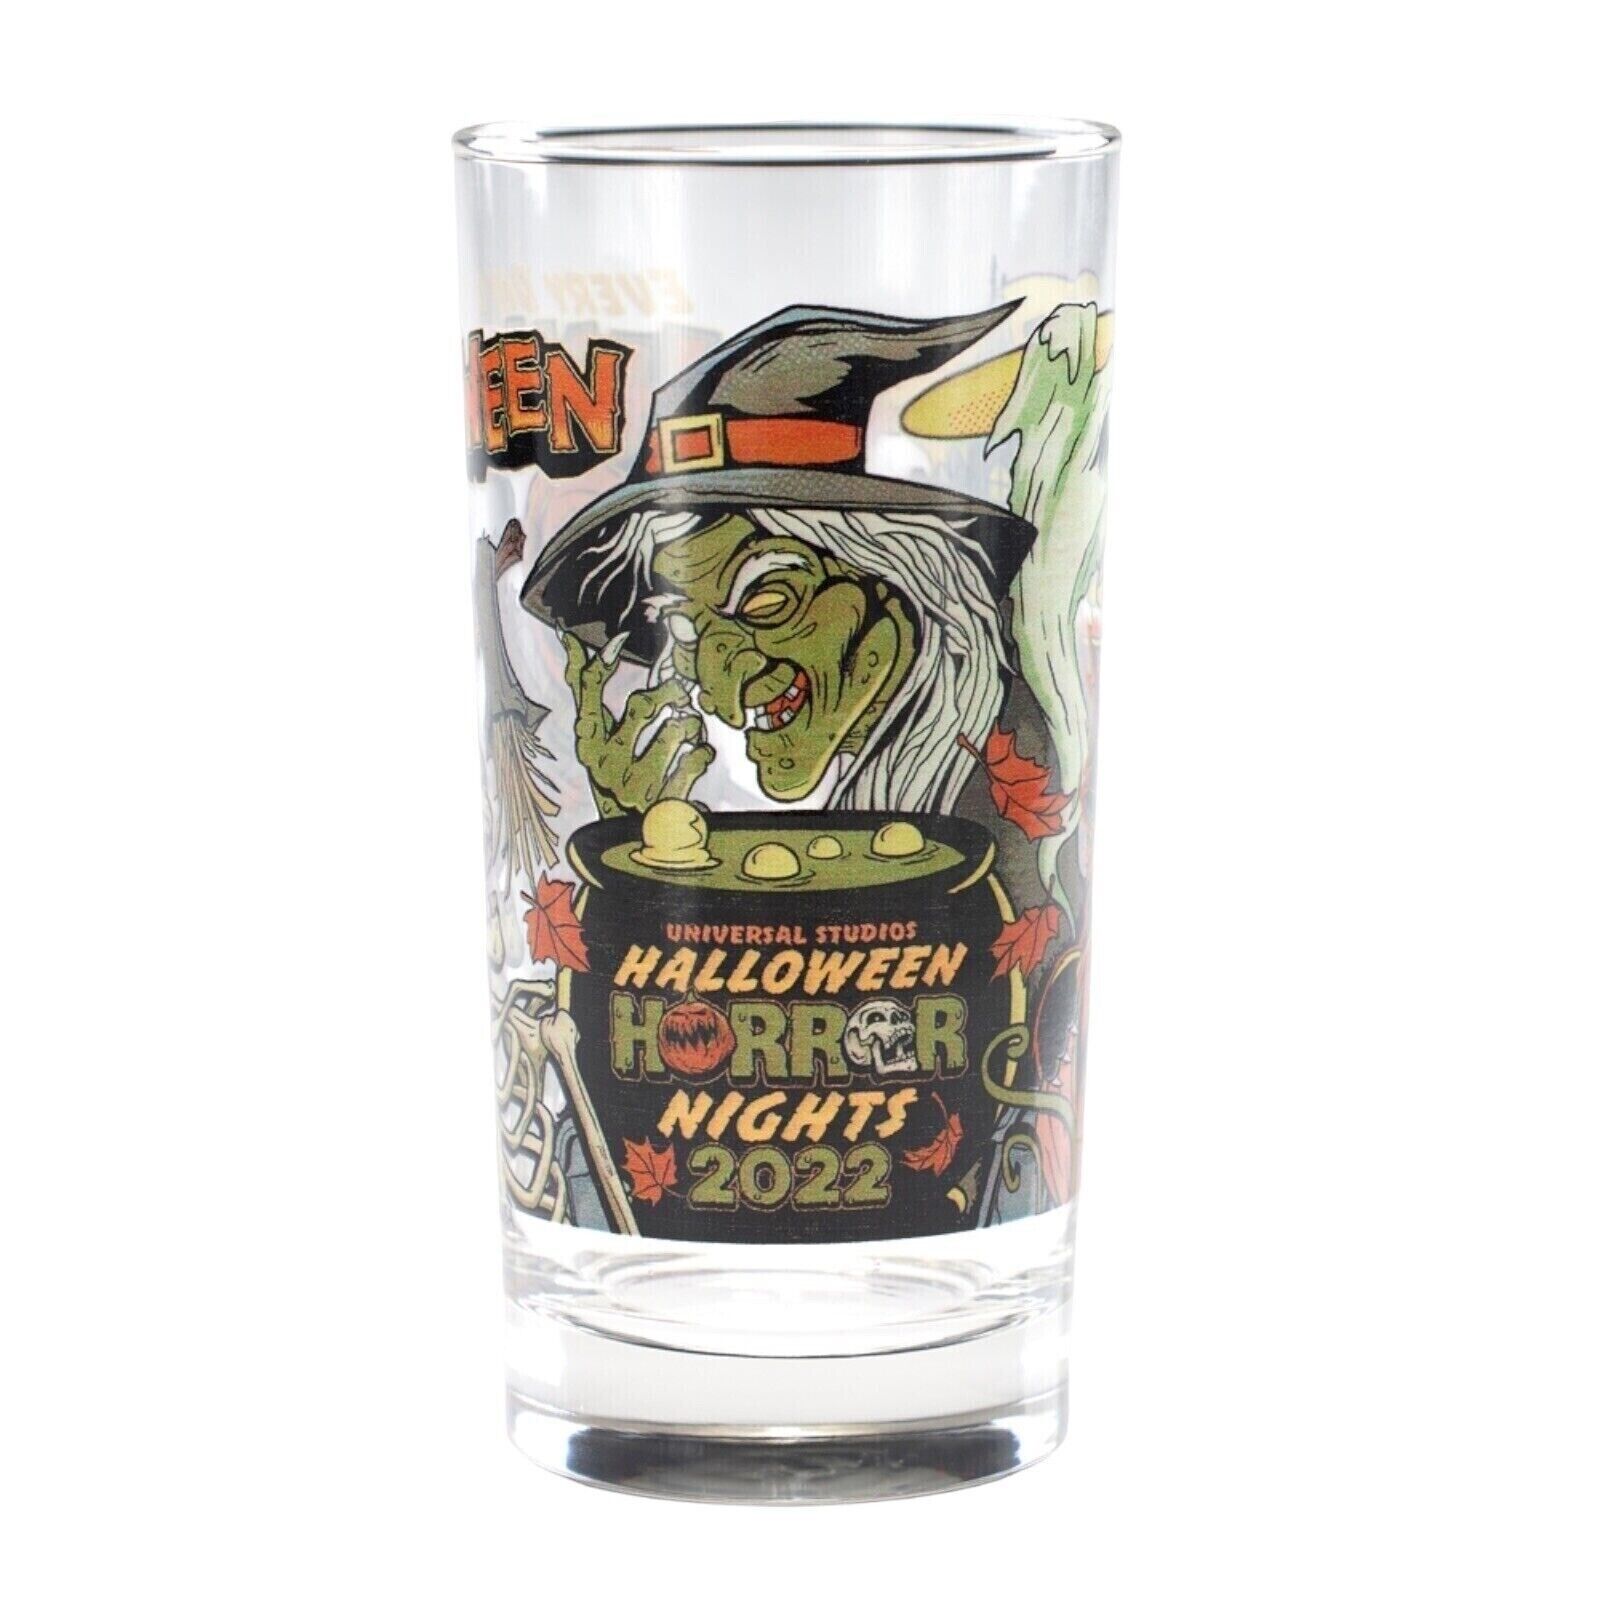 2022 Universal Studios Halloween Horror Nights October 31st Collectible Glass